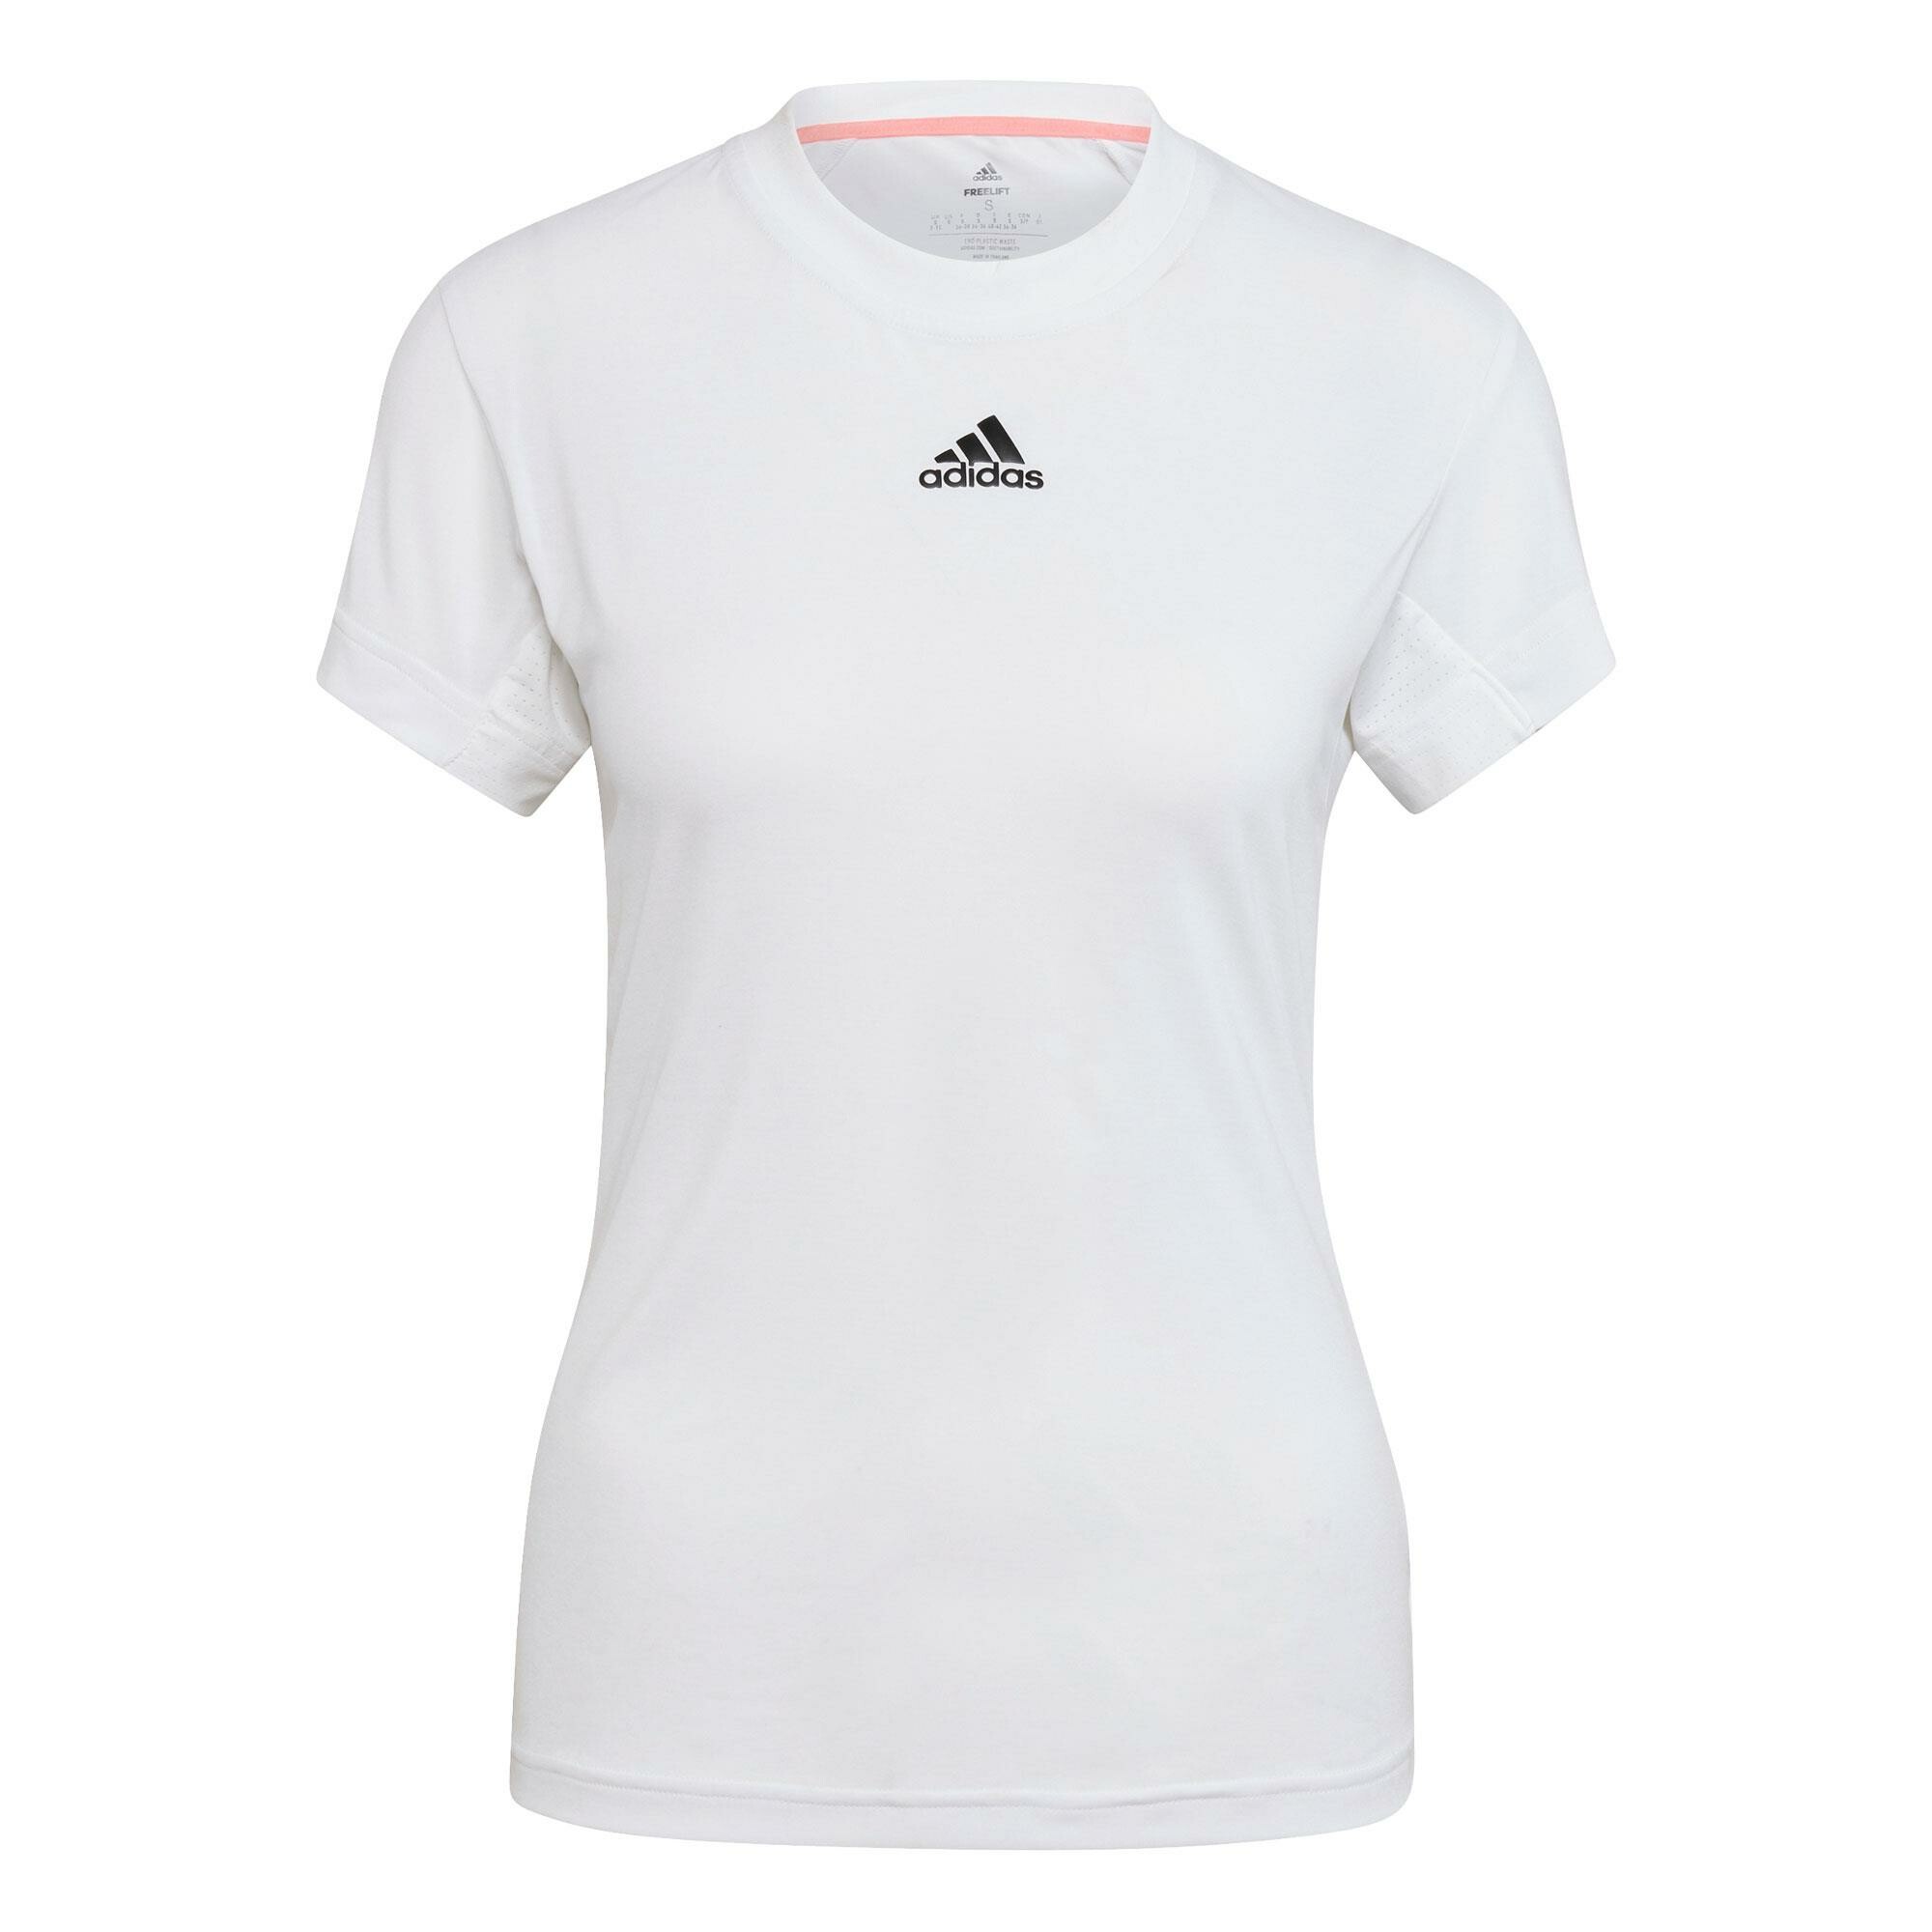 Adidas FreeLift tennisshirt white